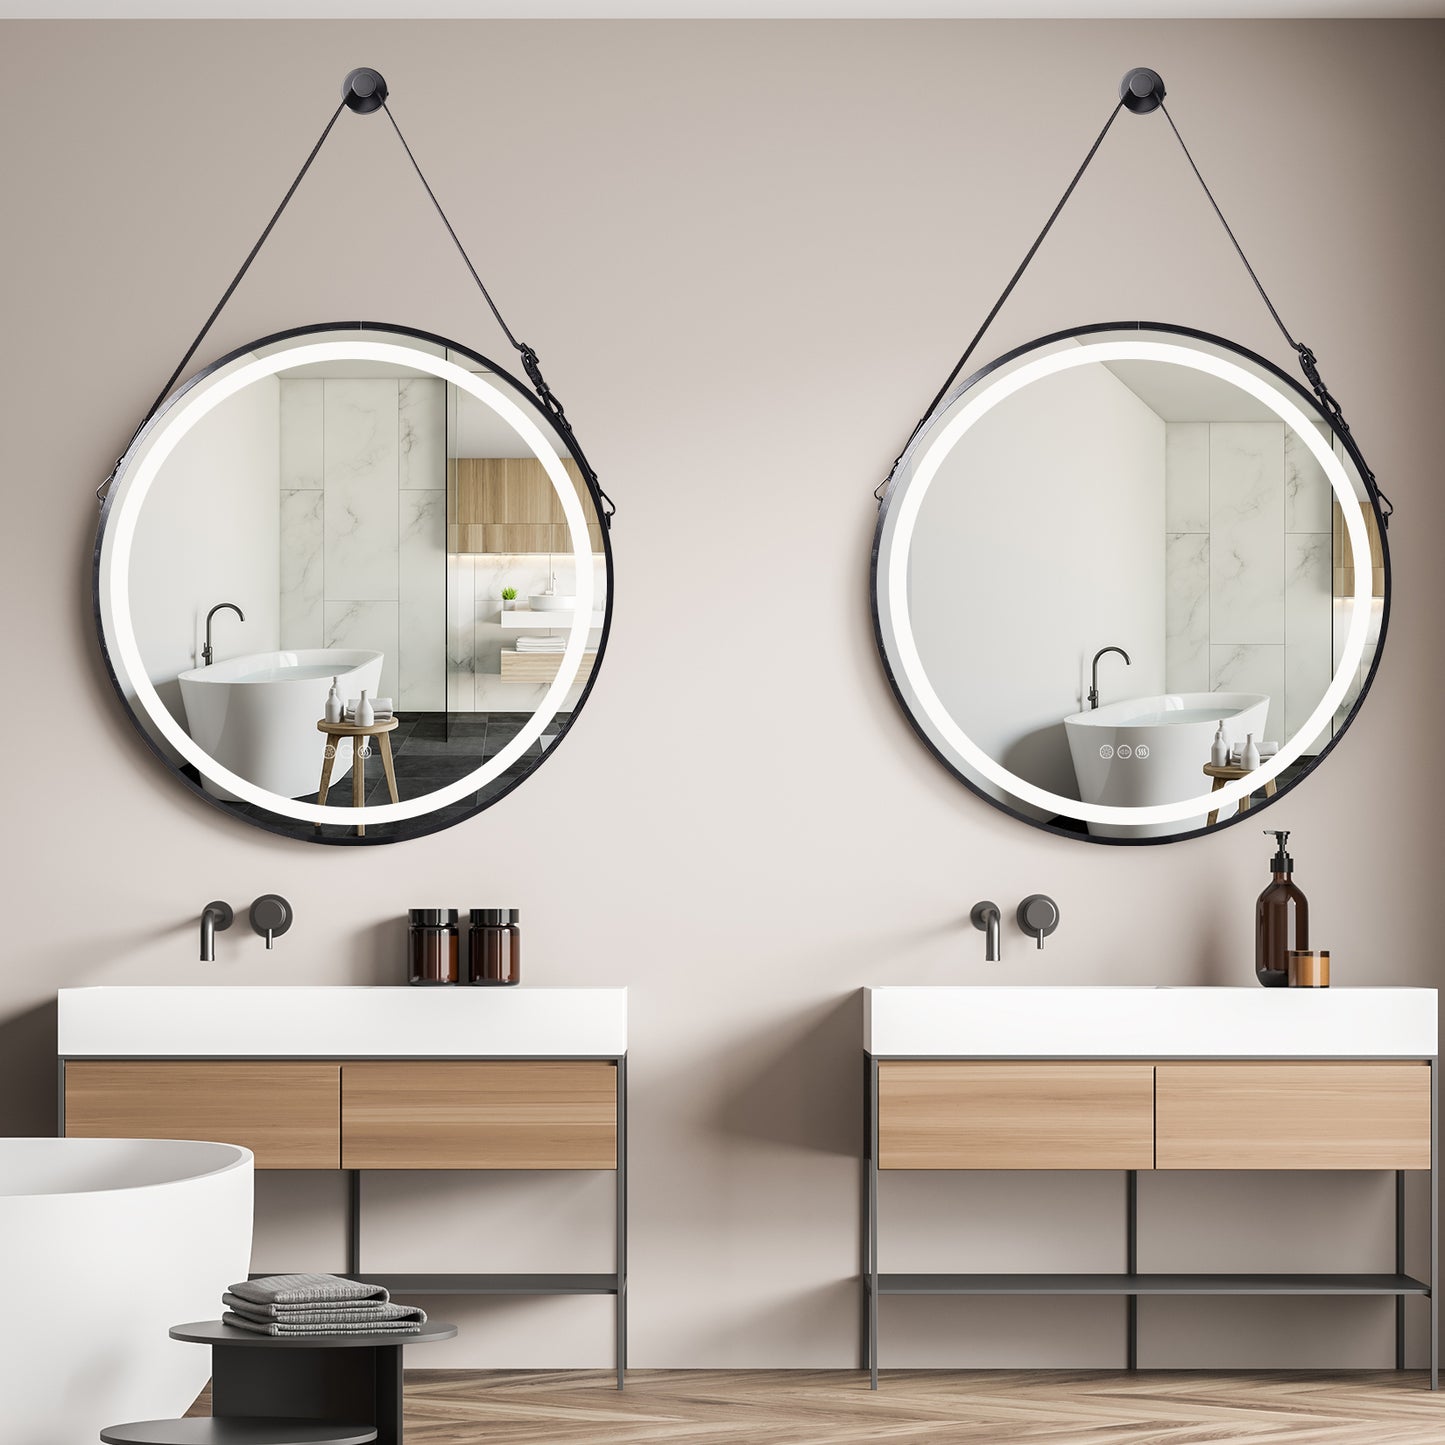 Led Illuminated Bathroom Mirror with Hanging Rope